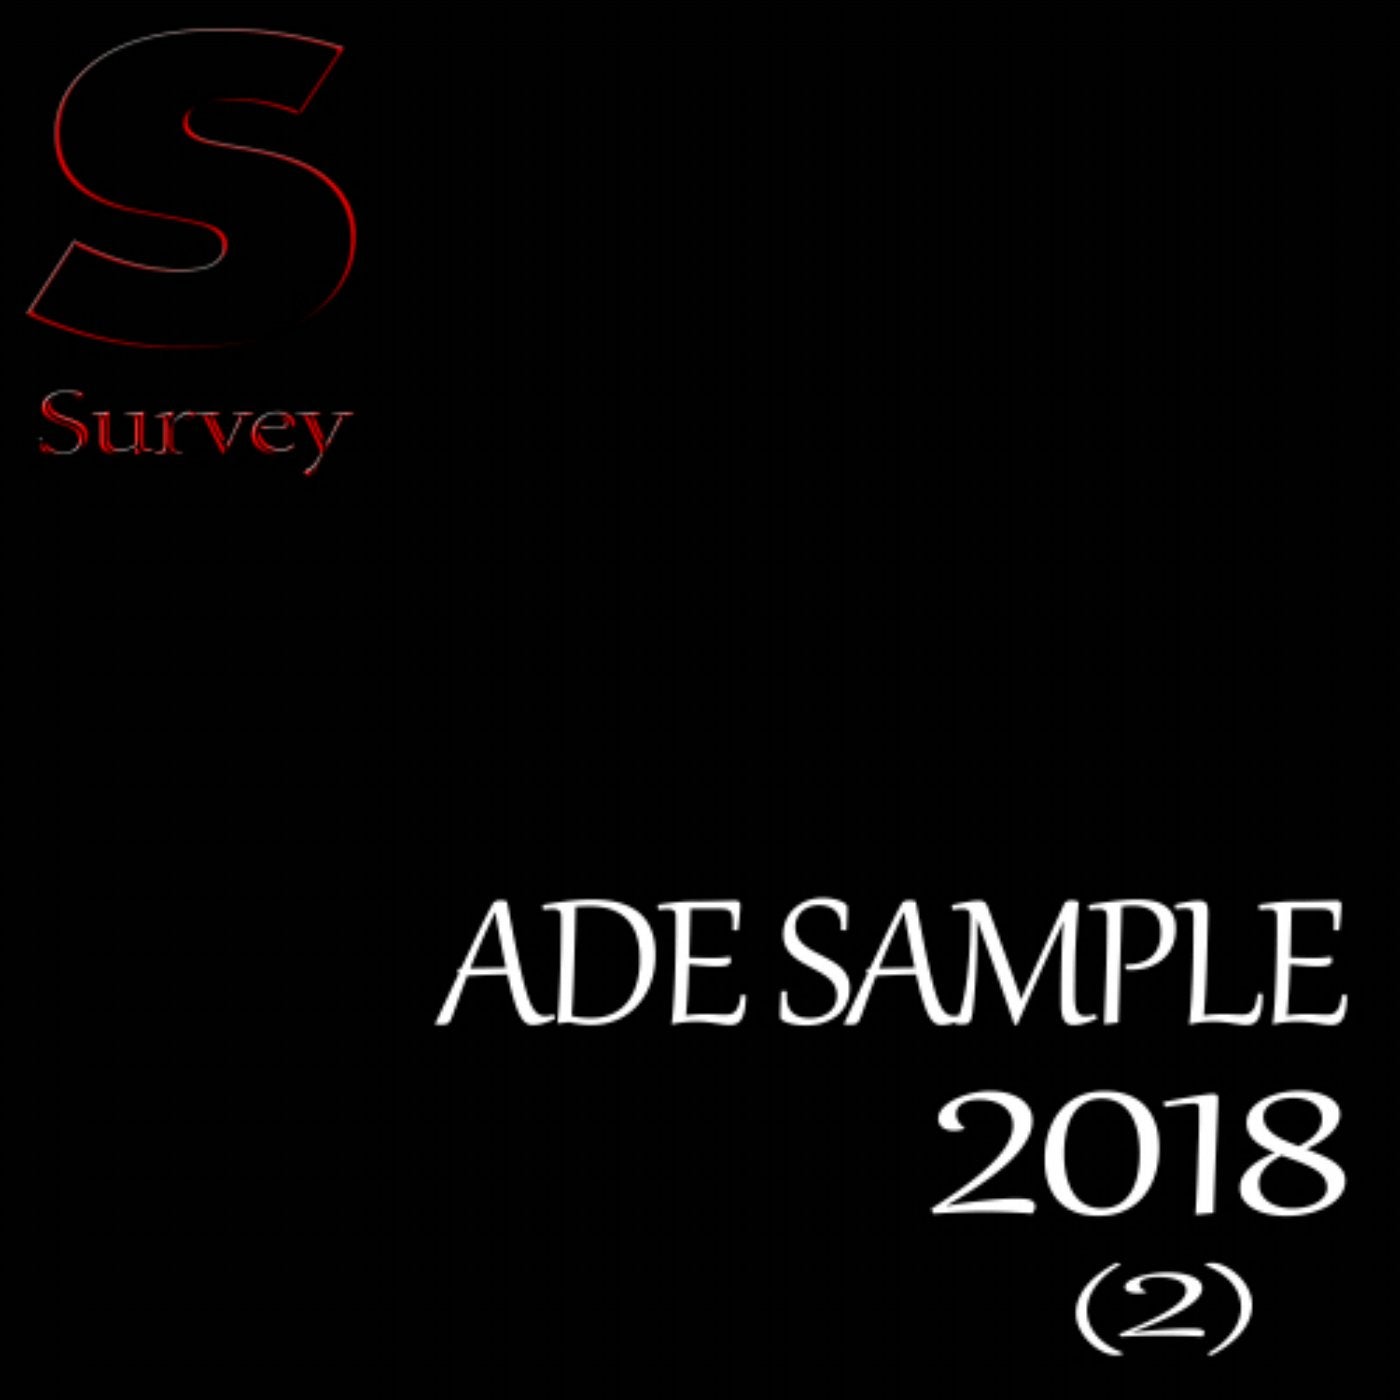 ADE SAMPLE 2018 (2)